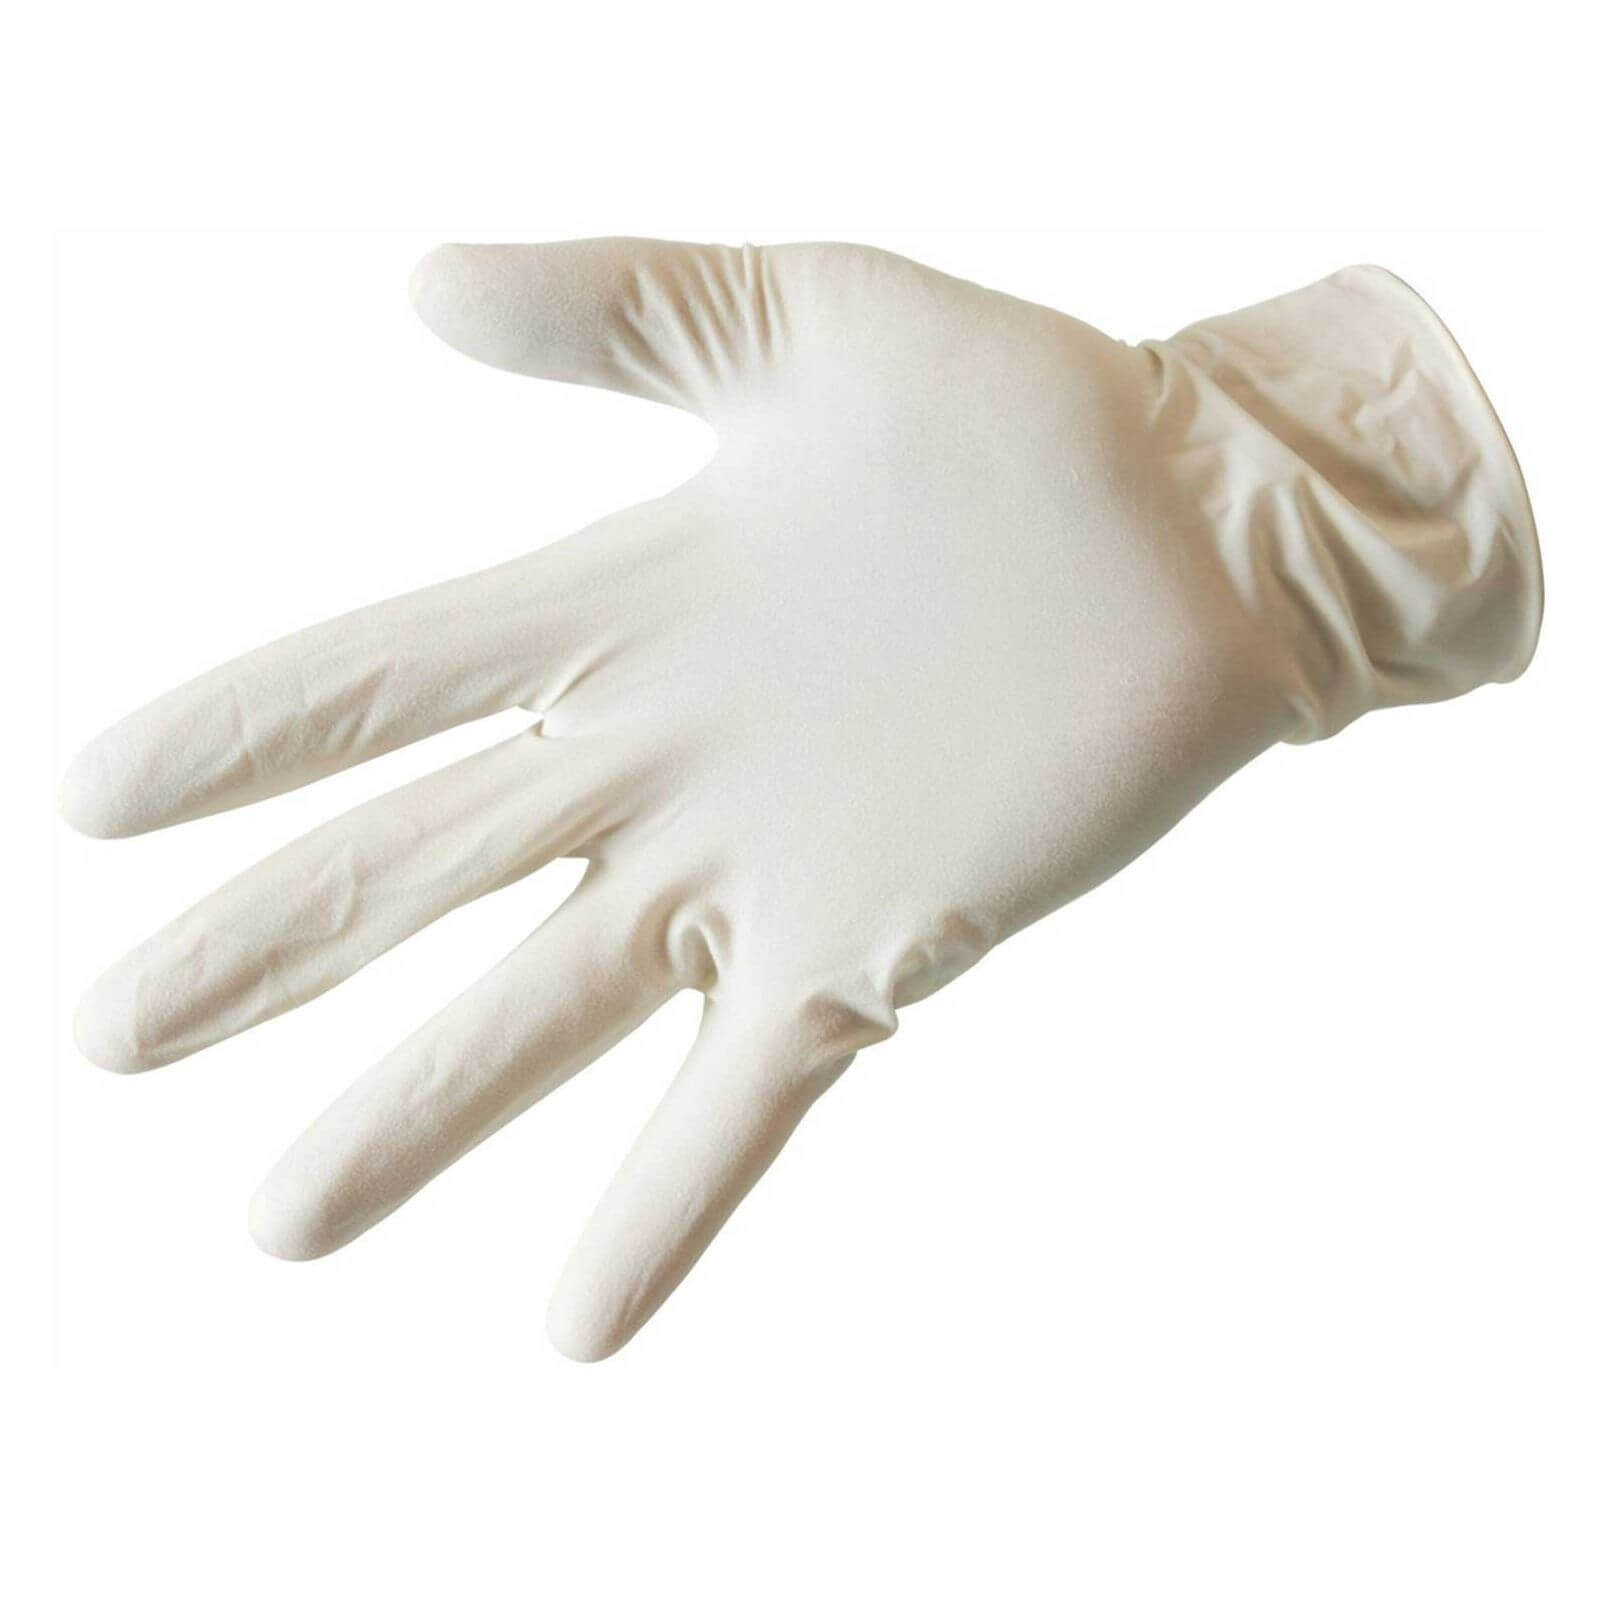 Harris Taskmasters Latex Gloves - 10 Pack